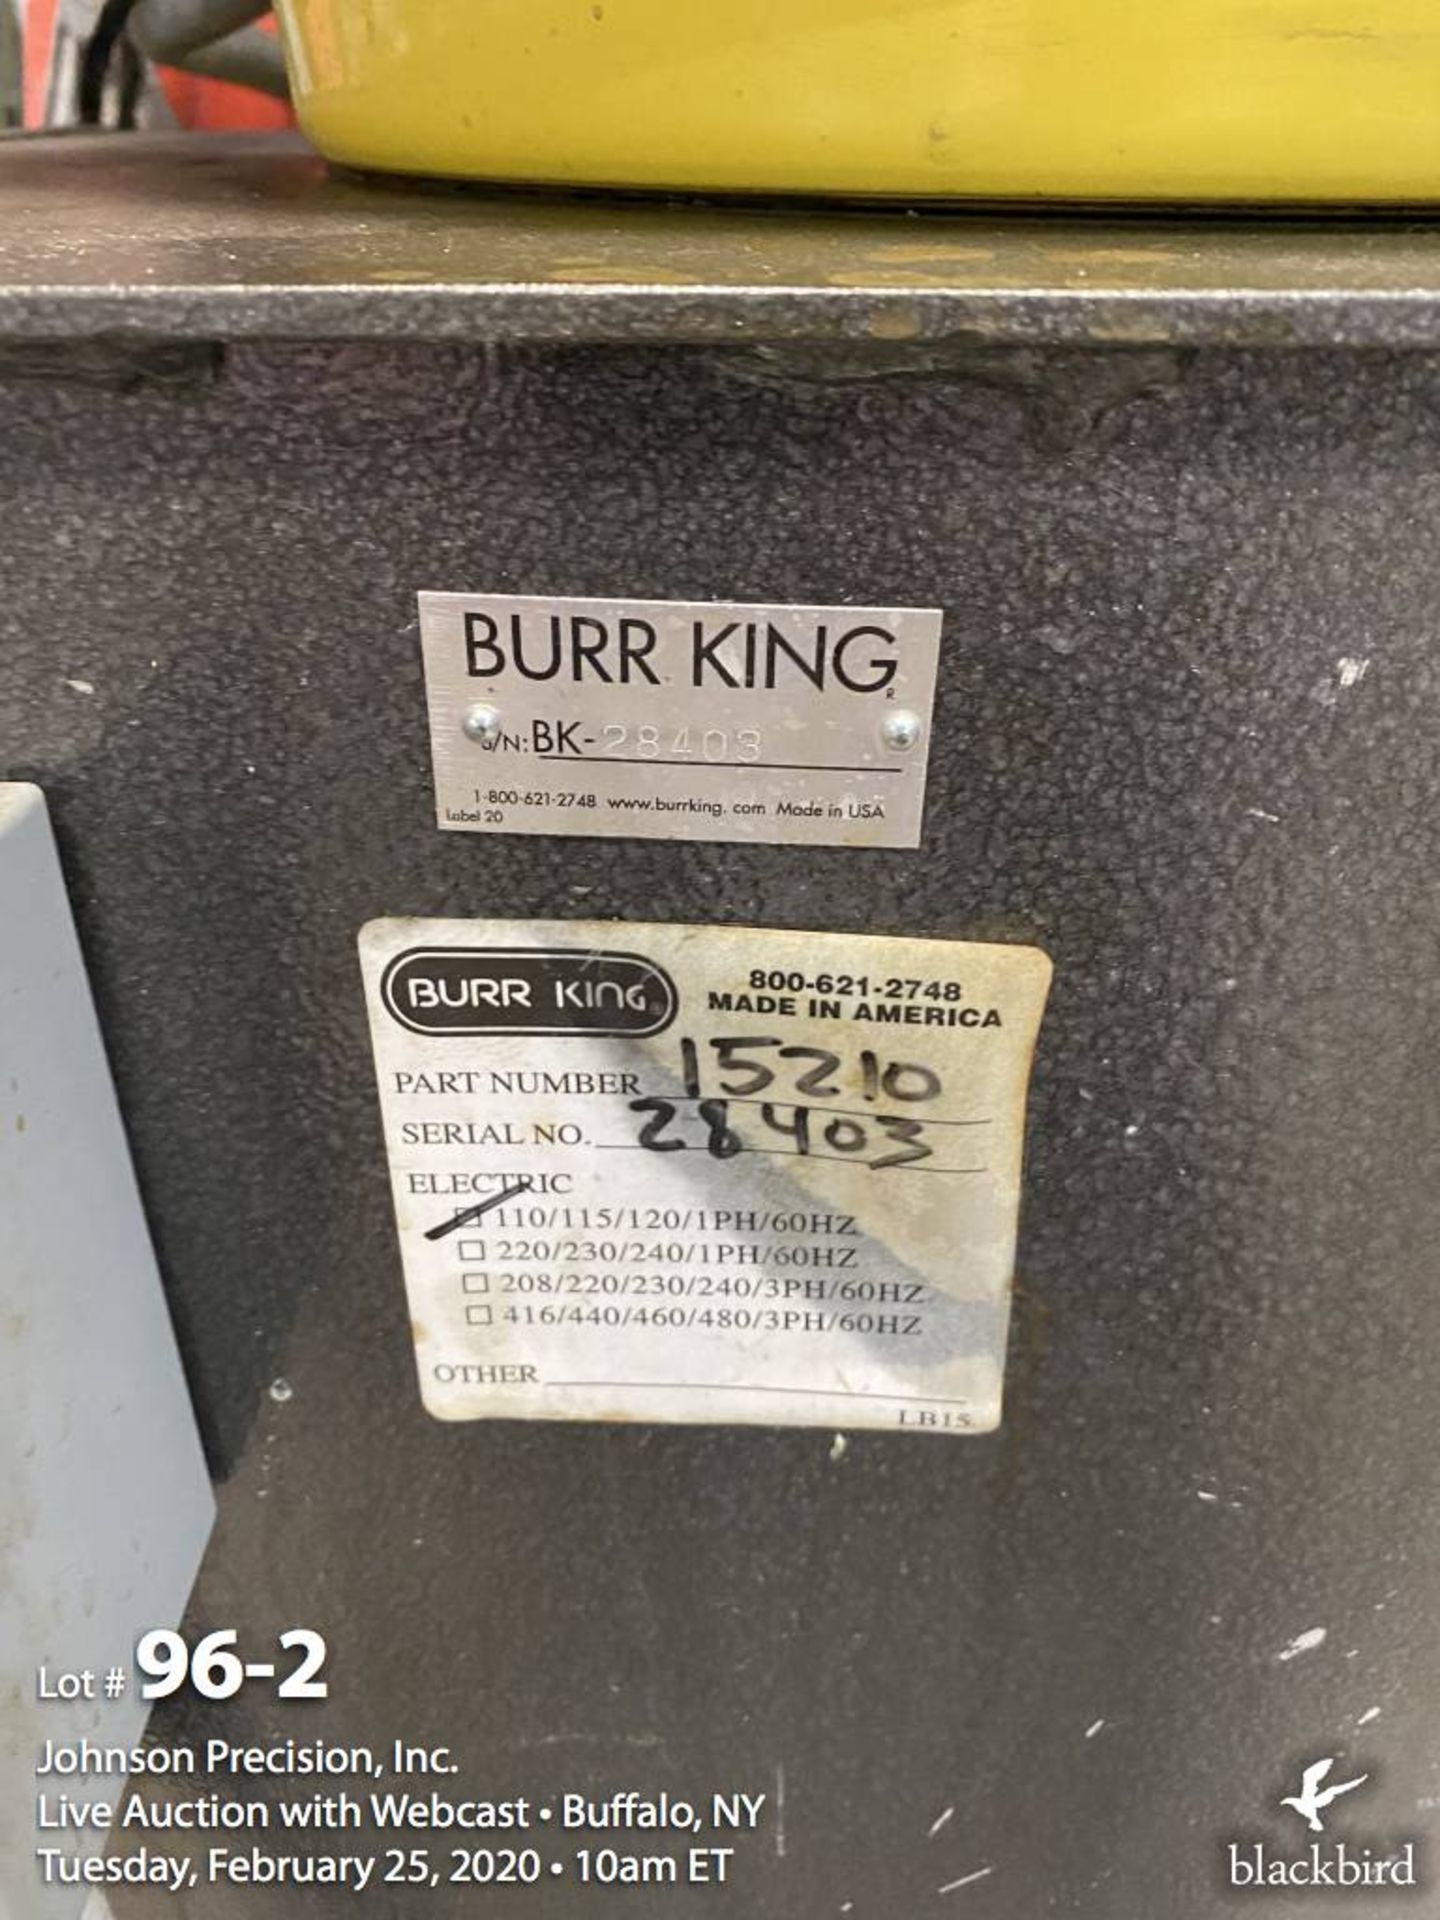 Burr King model 15210 vibrating finisher - Image 2 of 5